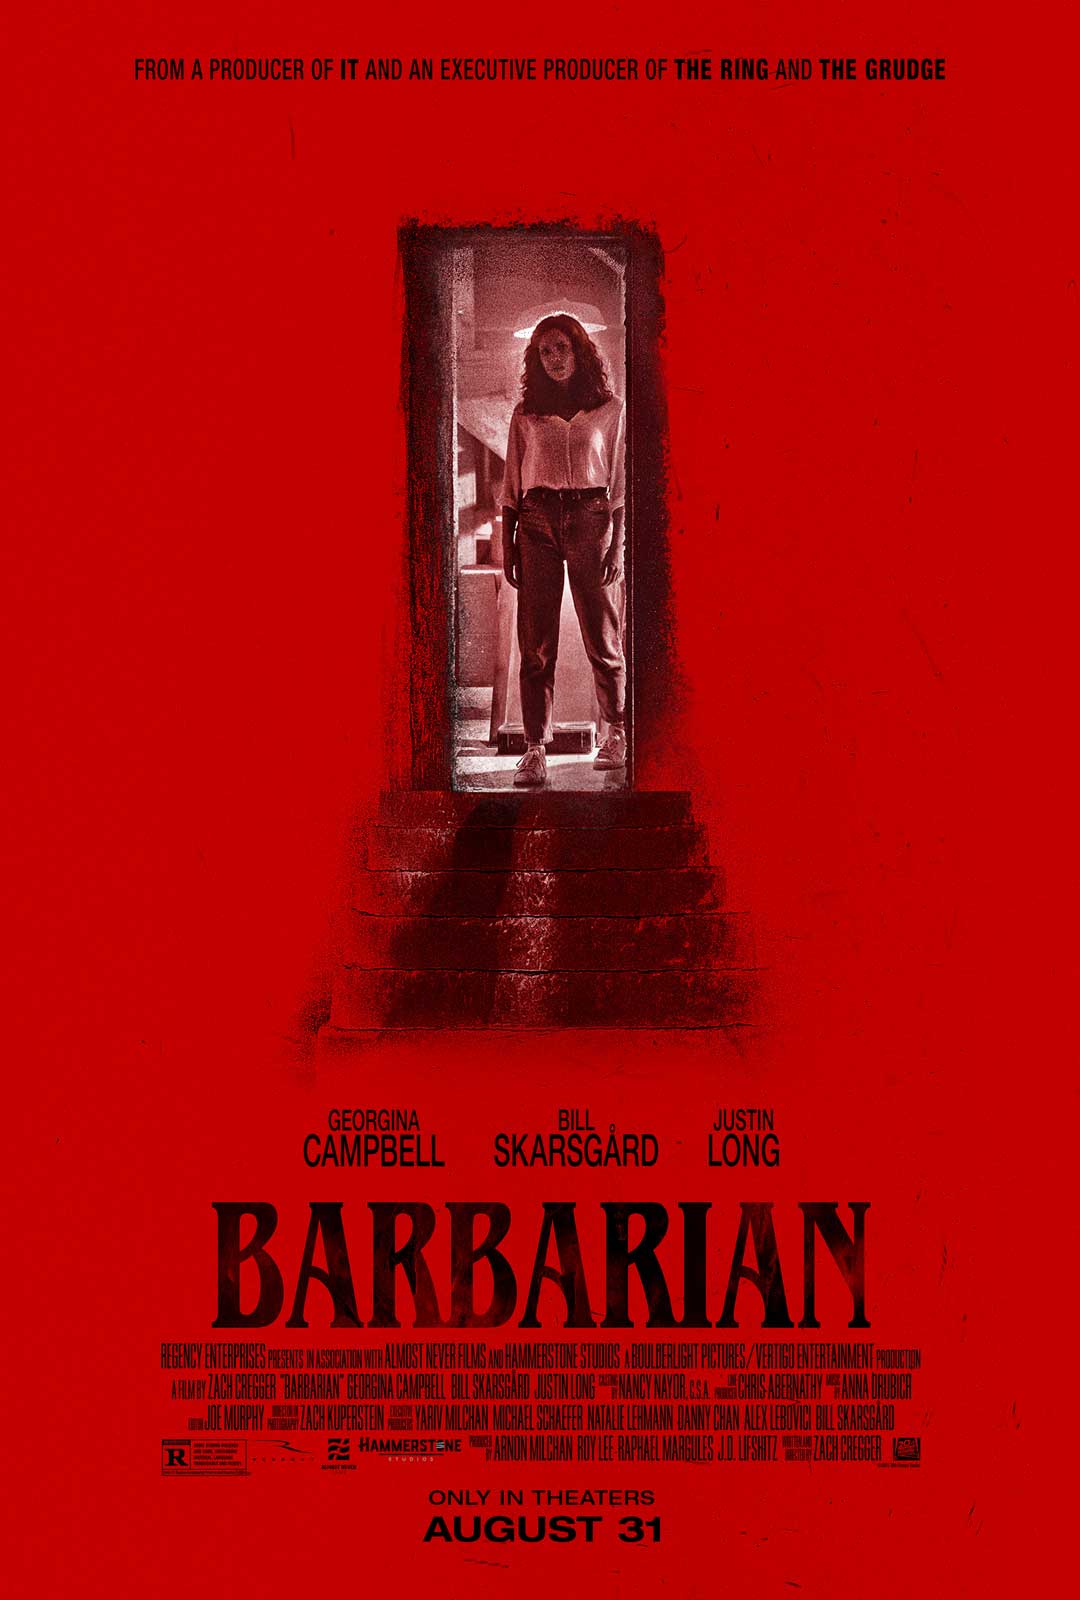 Barbarian Review